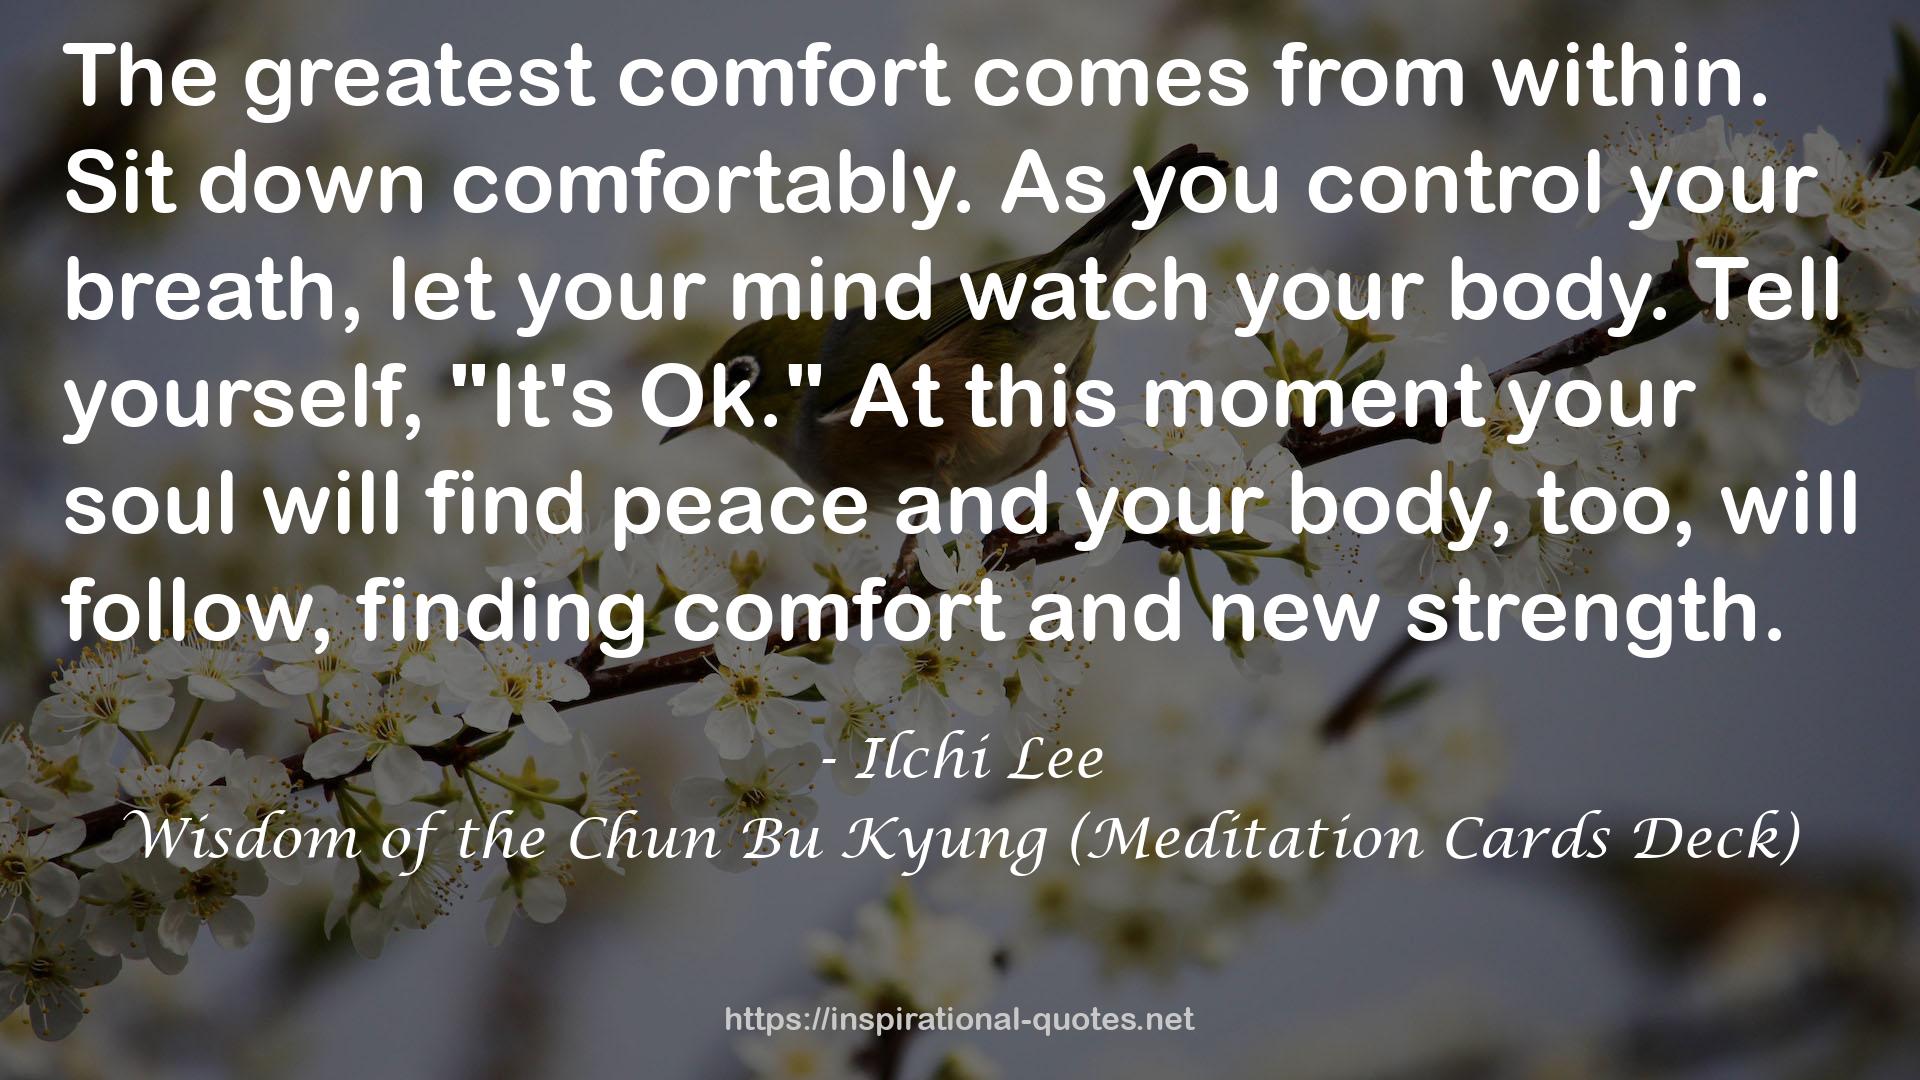 Wisdom of the Chun Bu Kyung (Meditation Cards Deck) QUOTES